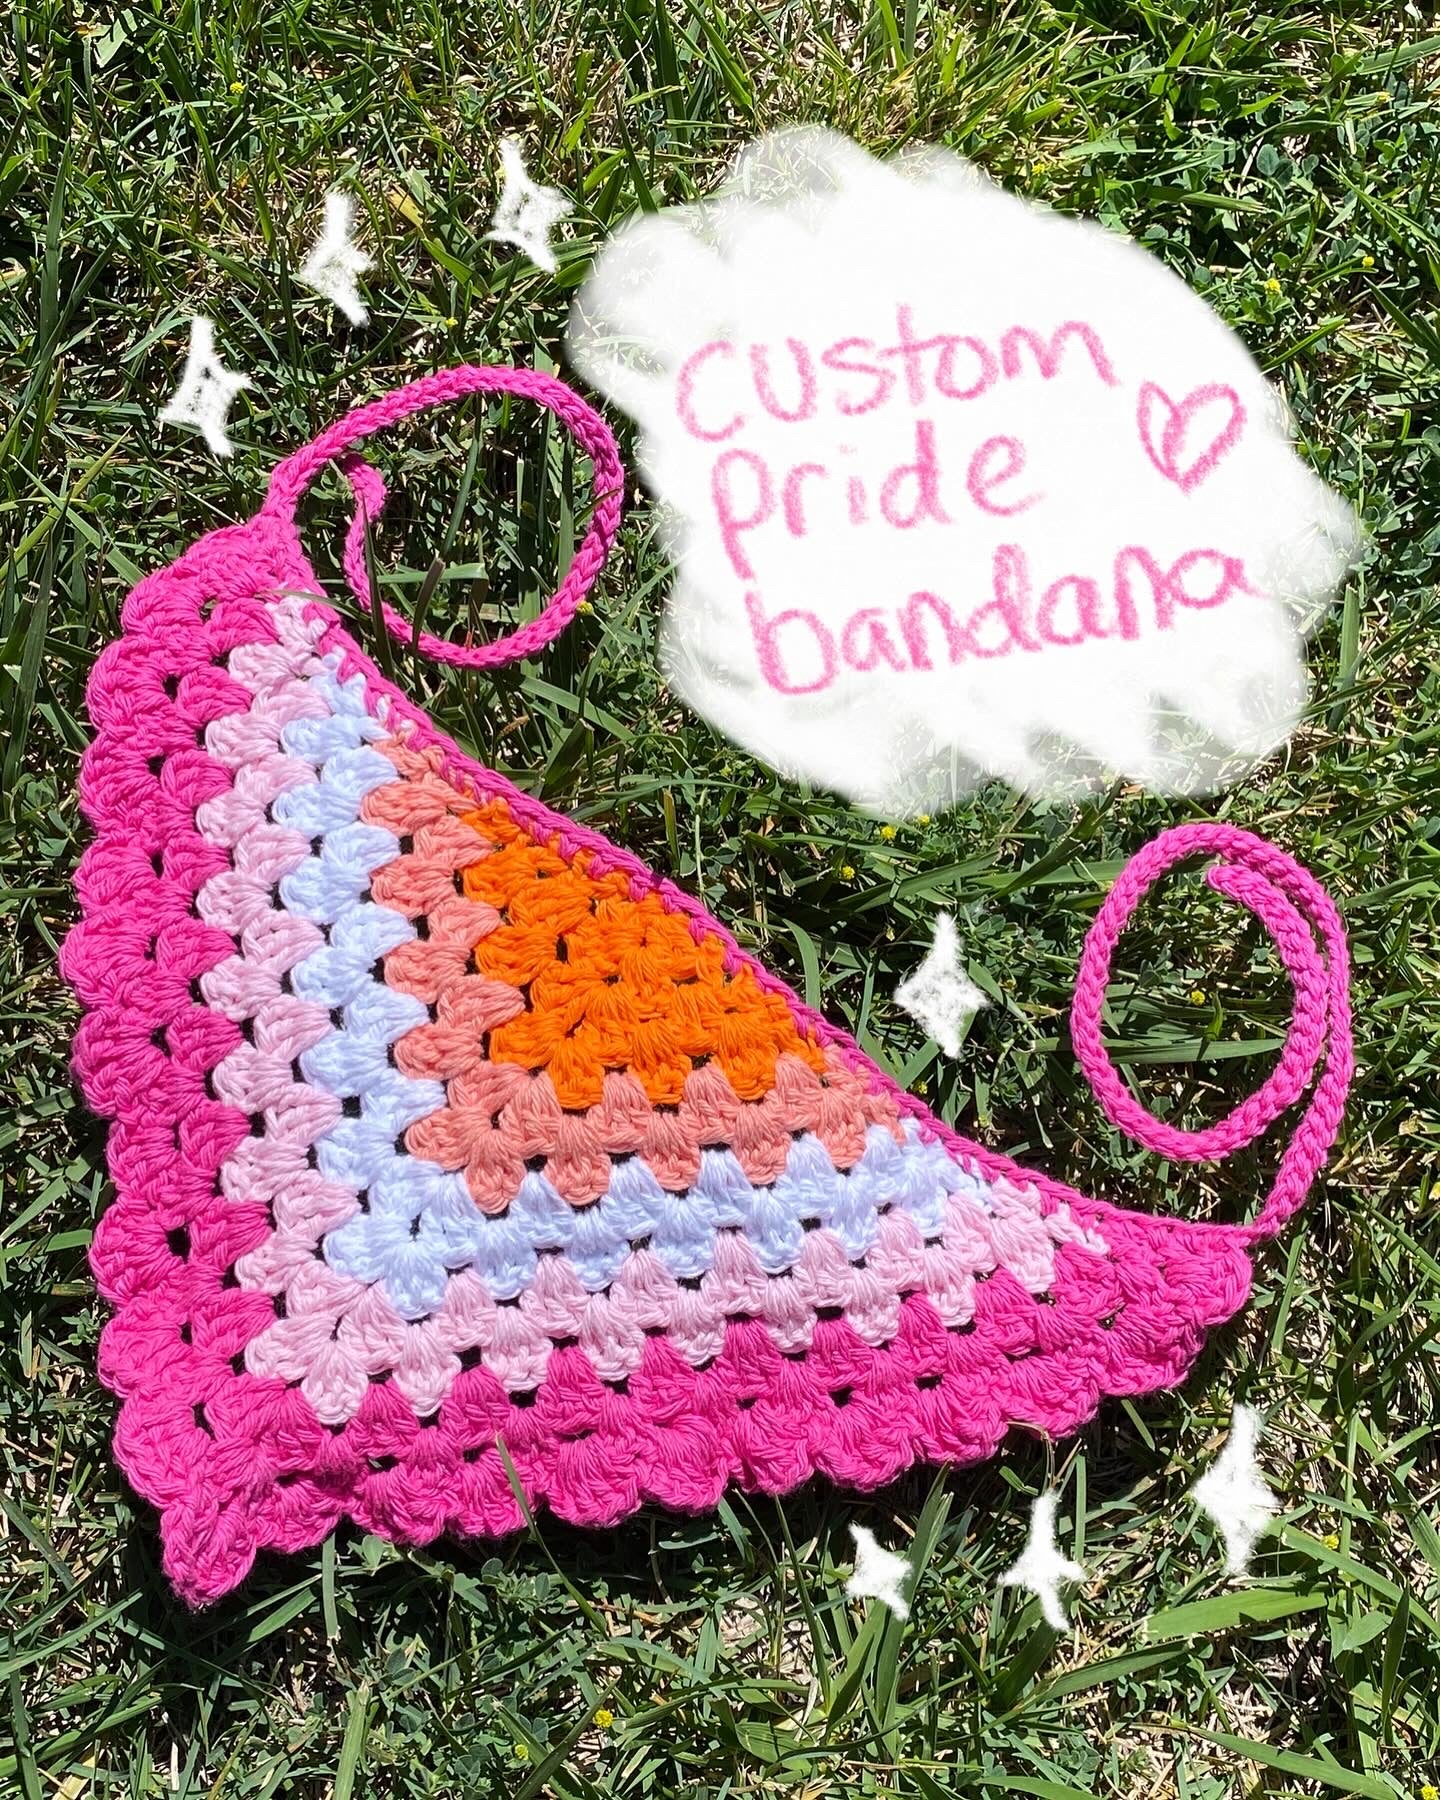 Customizable Pride Bundle - Headband & Tote